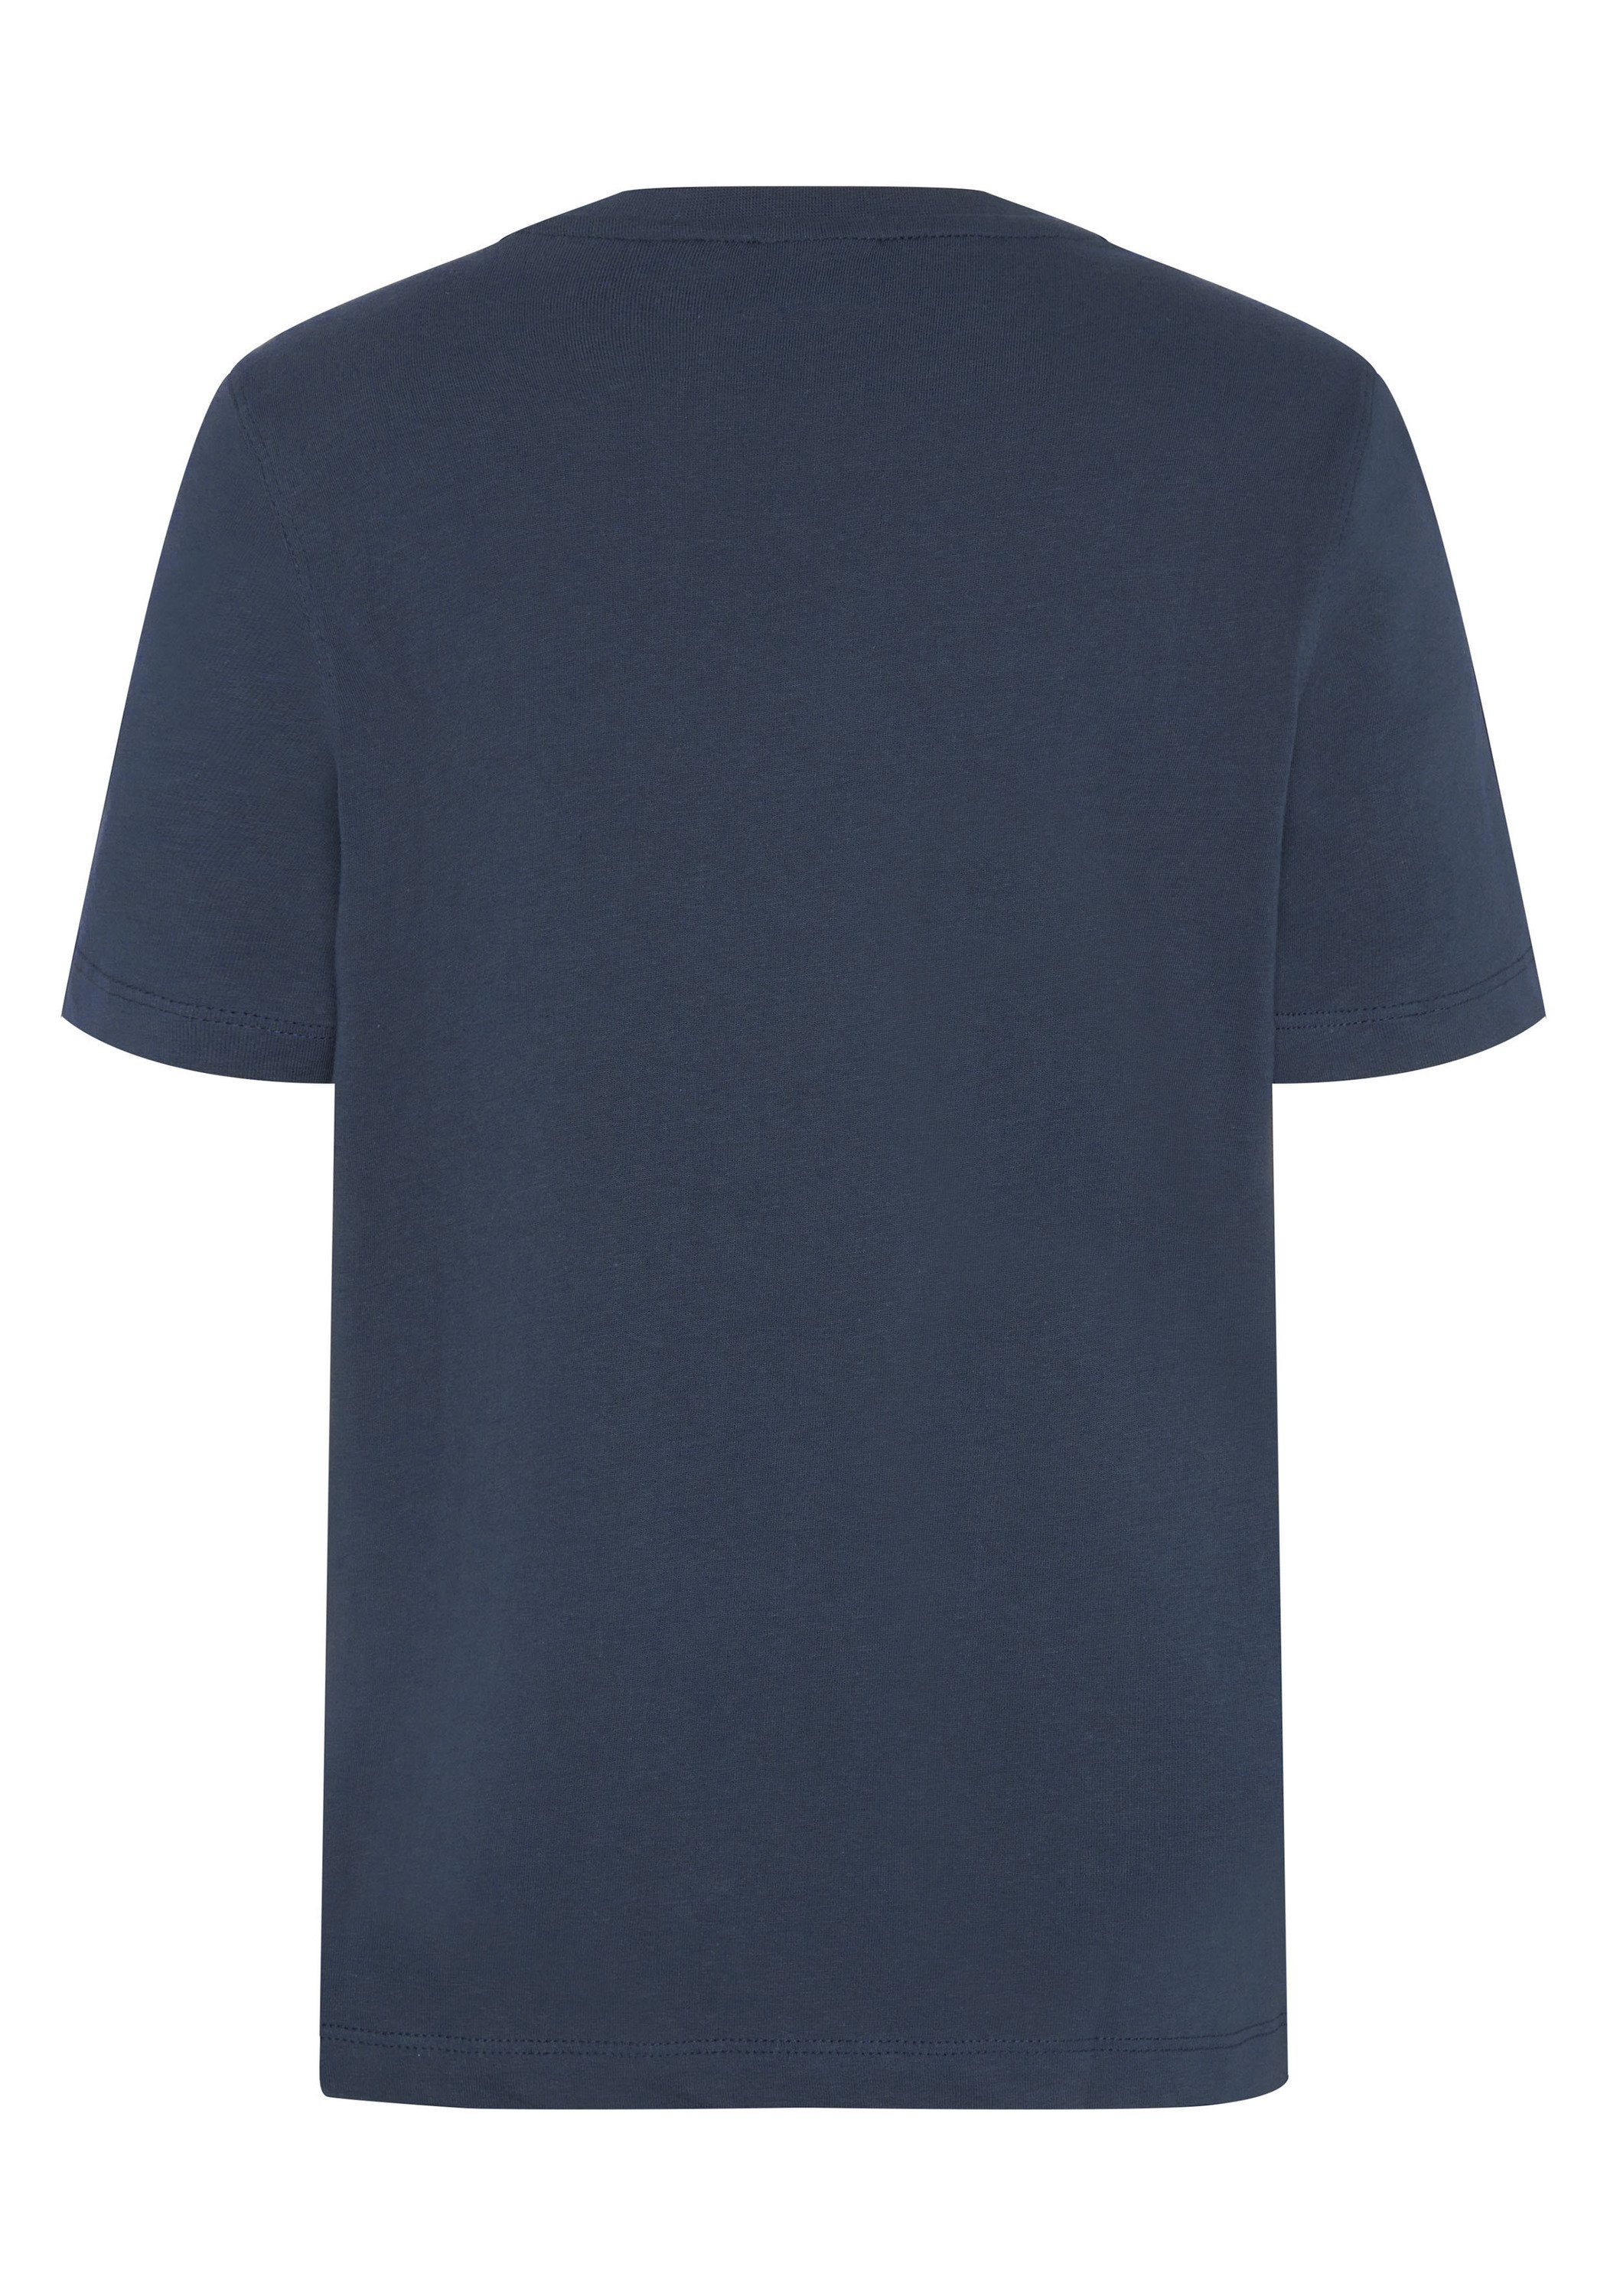 Polo farbenfrohem Print-Shirt mit Logoprint Eclipse Total Sylt 19-4010